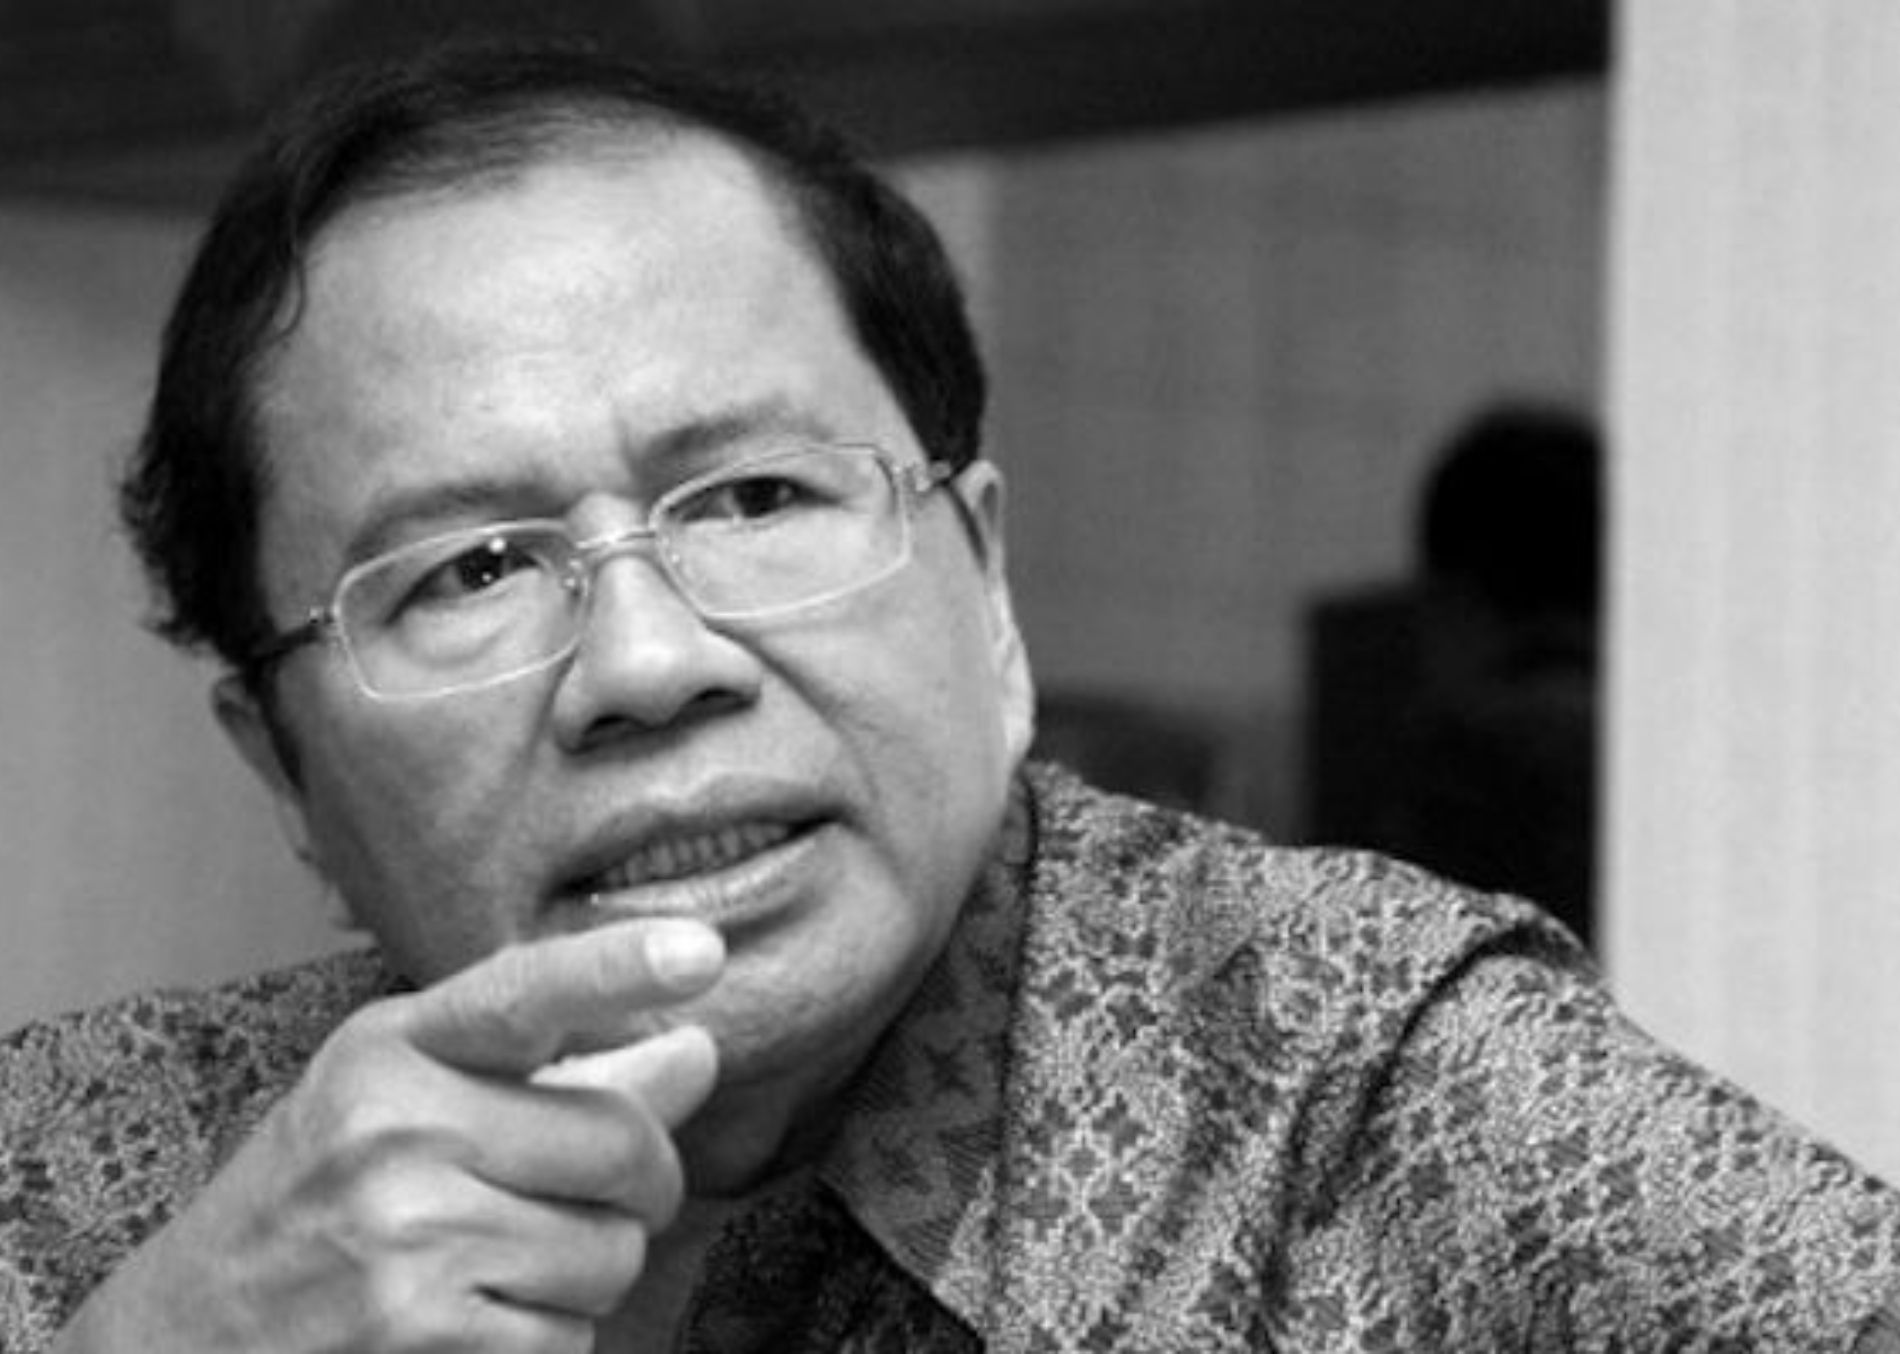 Meski sering dikritik almarhum Rizal Ramli, Presiden Jokowi tetap mendoakan wafatnya Menteri Keuangan Era Presiden Gus Dur, memuji sosoknya